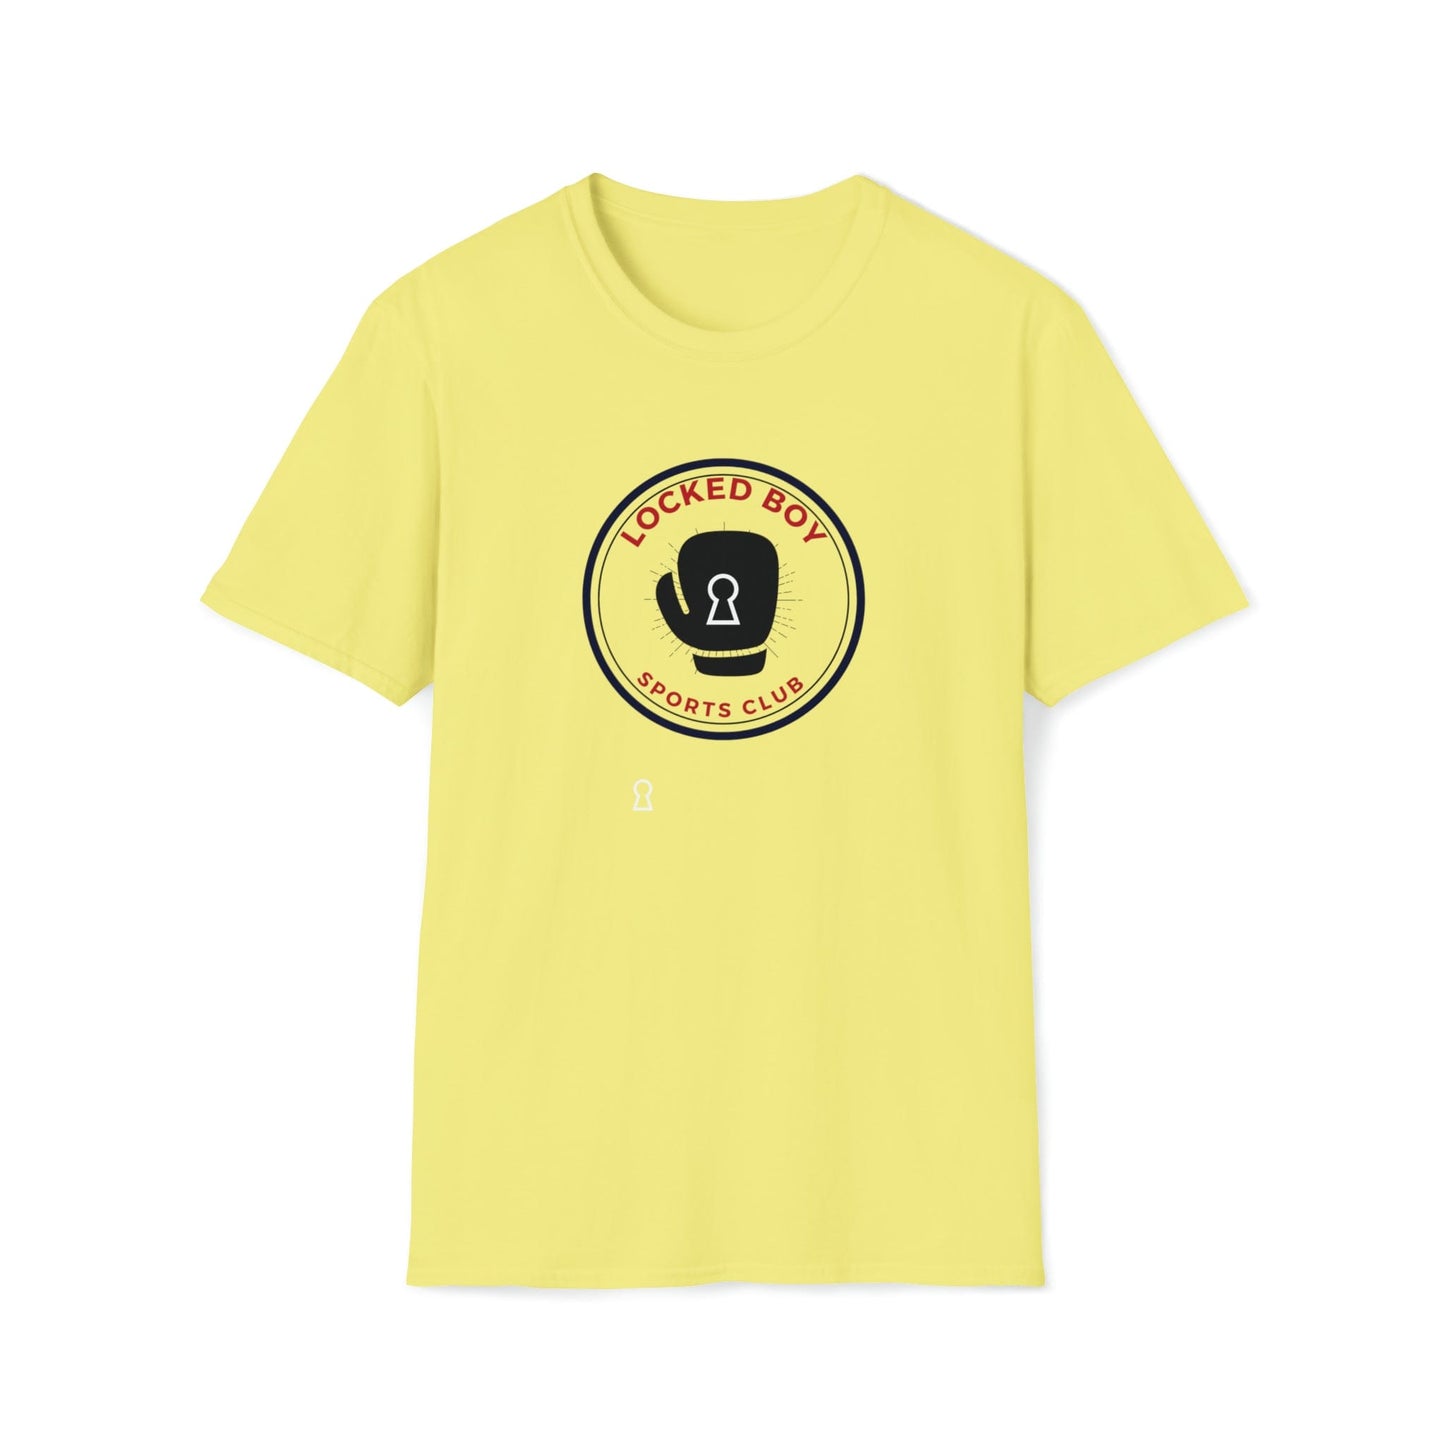 T-Shirt Cornsilk / S LockedBoy Sports Club - Chastity Tshirt Boxing Glove LEATHERDADDY BATOR